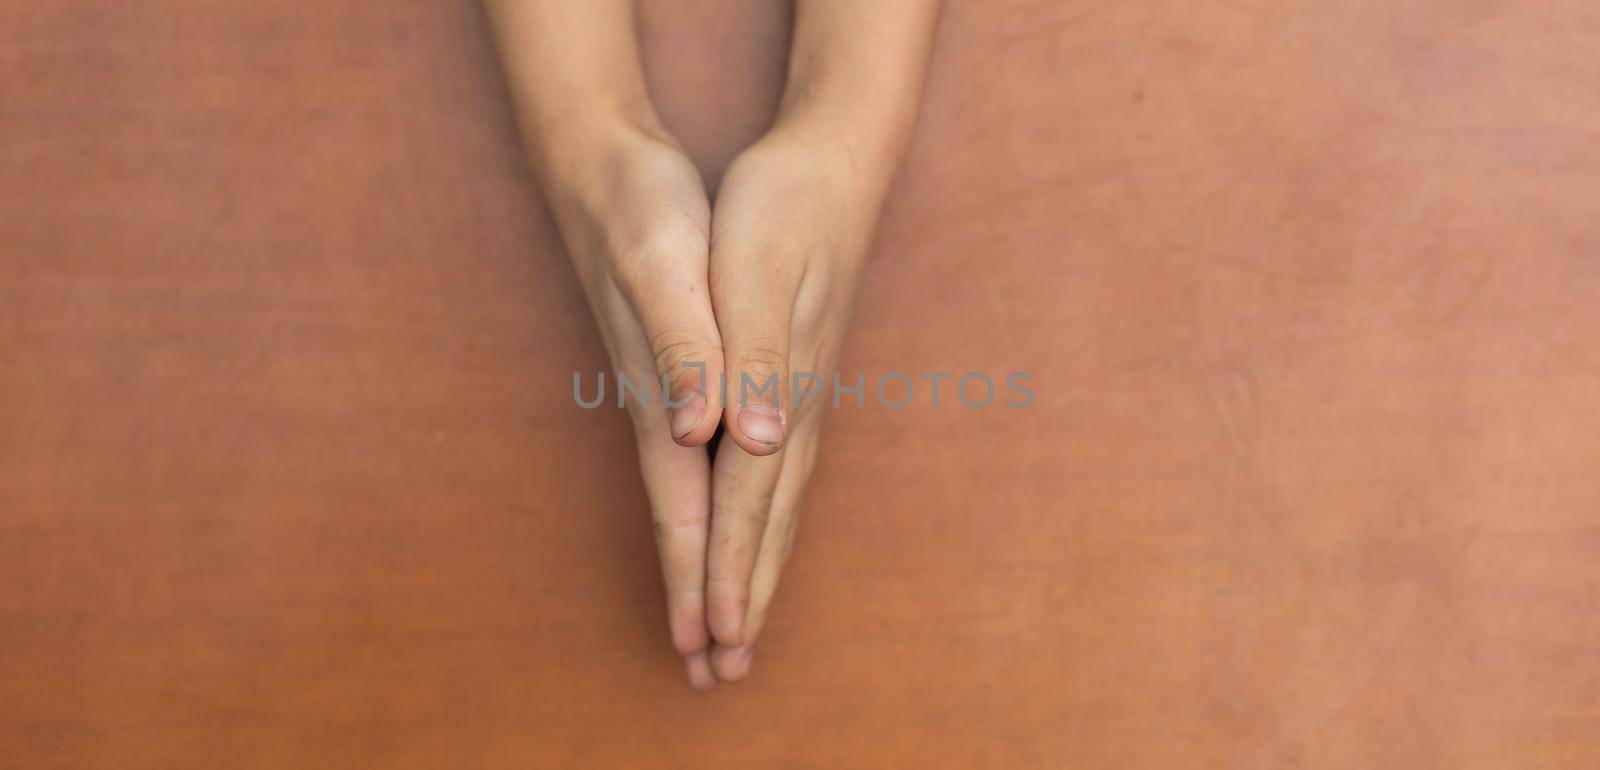 Child's hands folded together in prayer by Andelov13